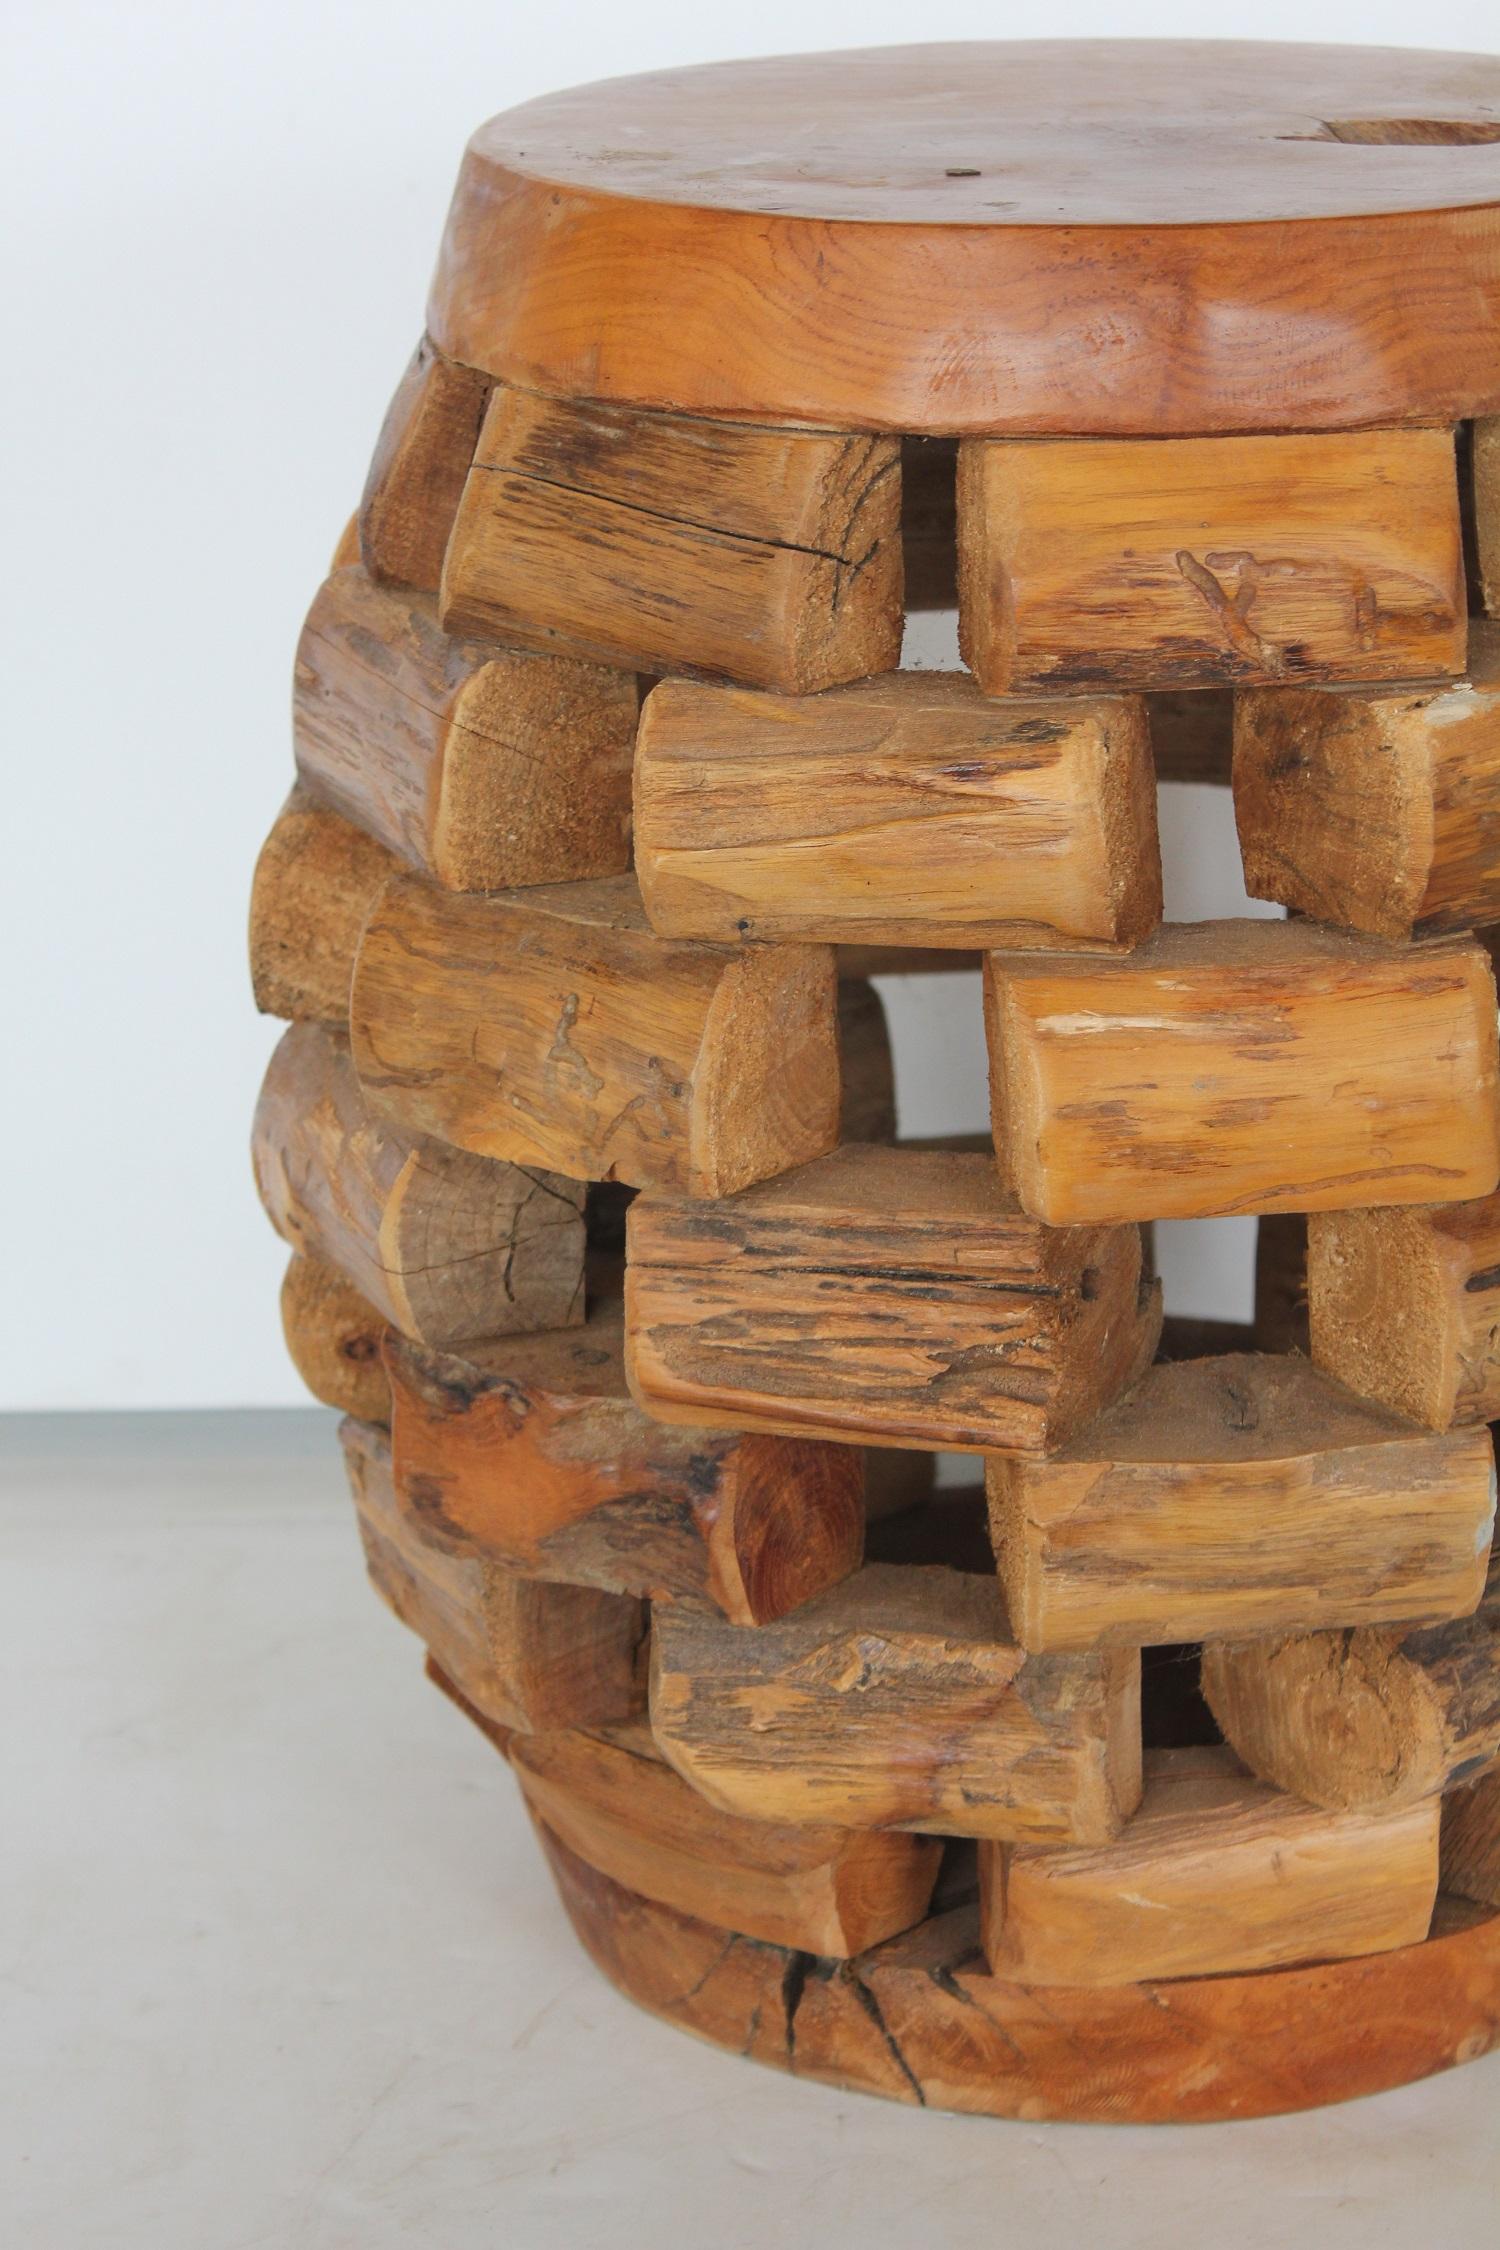 Modern handmade wood accent table or stool. Measures: Top diameter 11